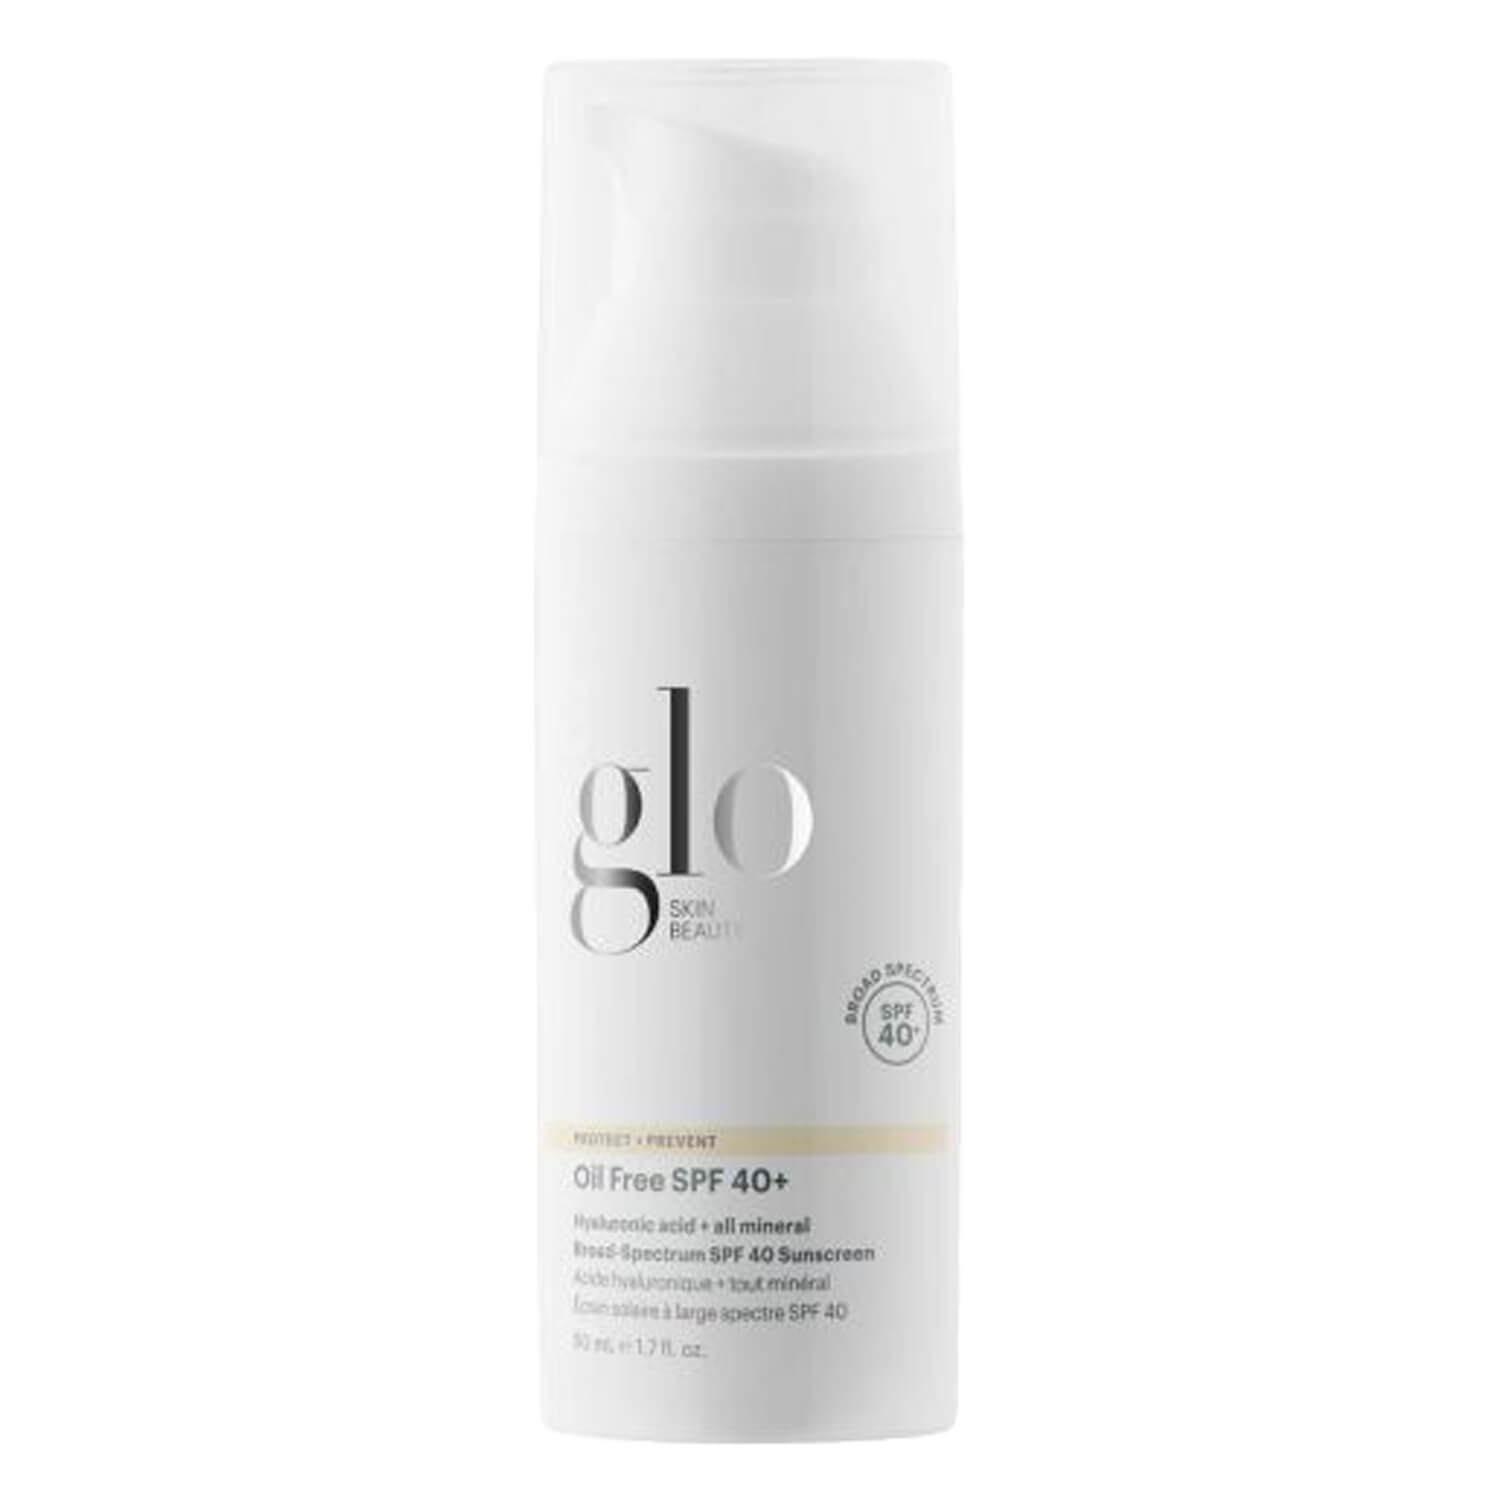 Produktbild von Glo Skin Beauty Care - Protect + Prevent Sunscreen Oil Free SPF 40+